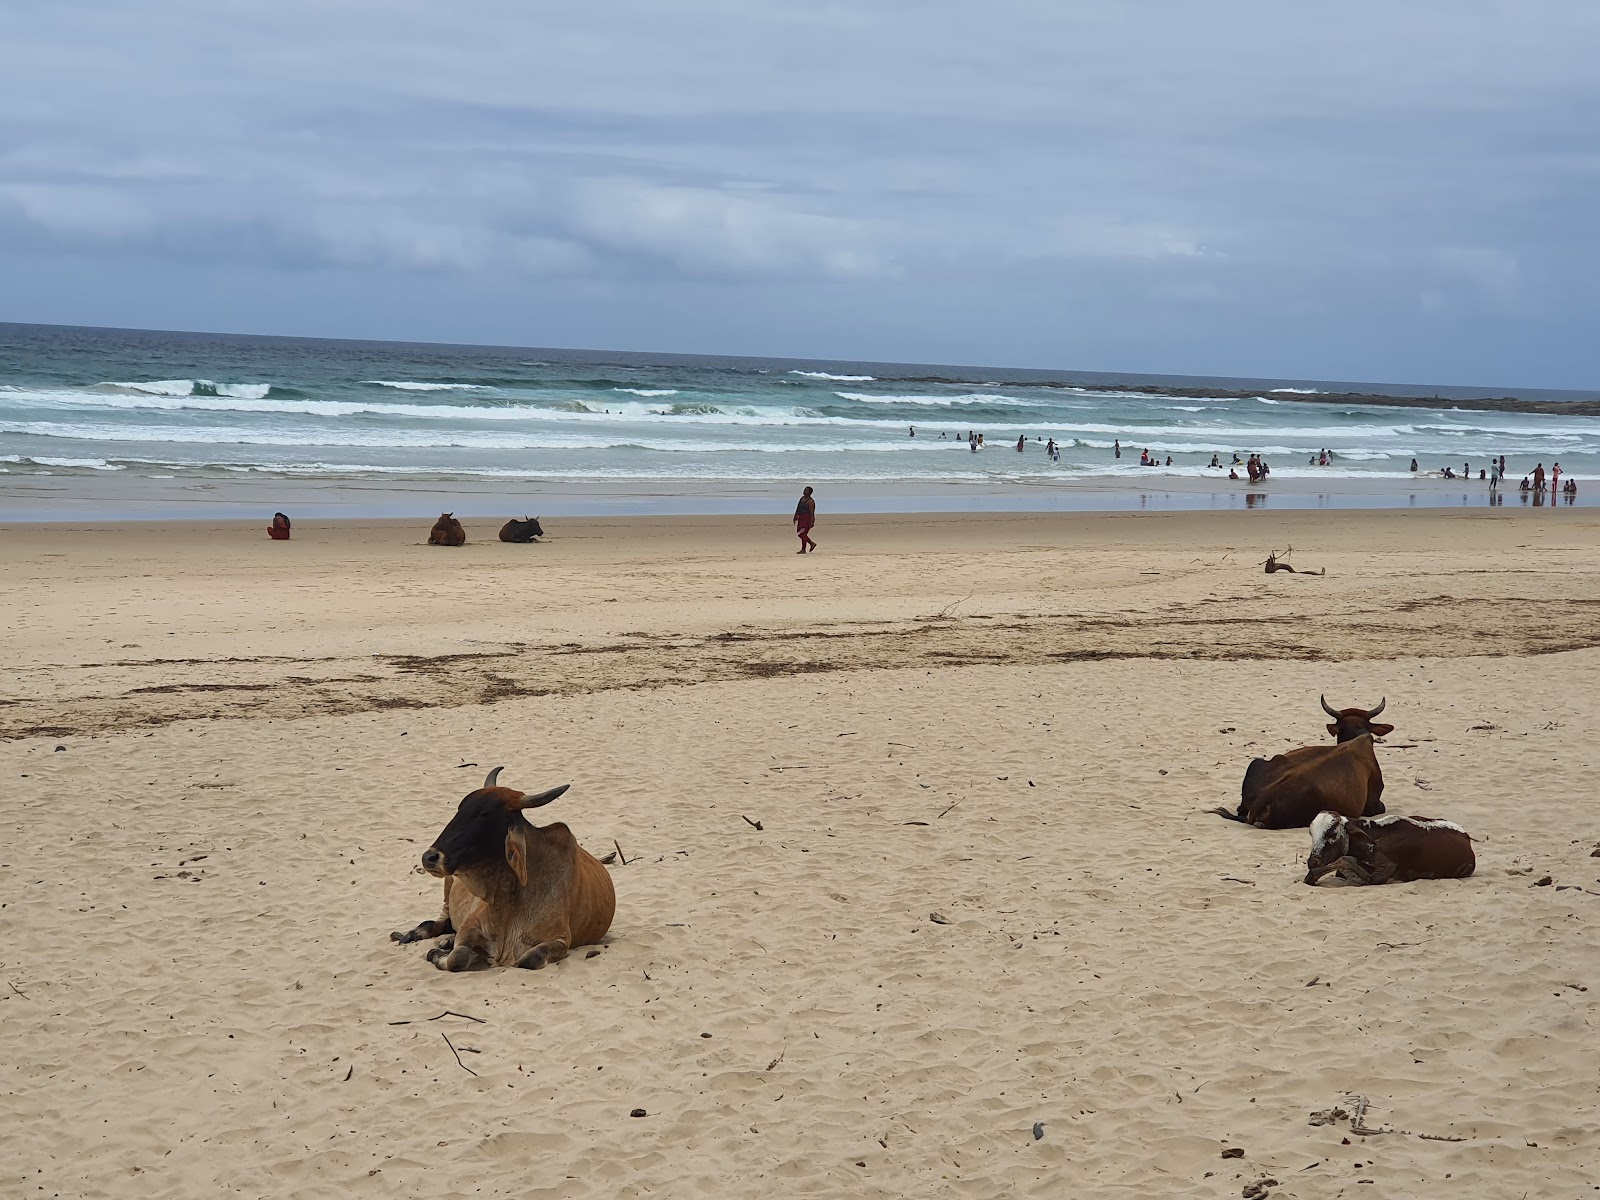 Fotografie cu Nenga beach cu nivelul de curățenie in medie